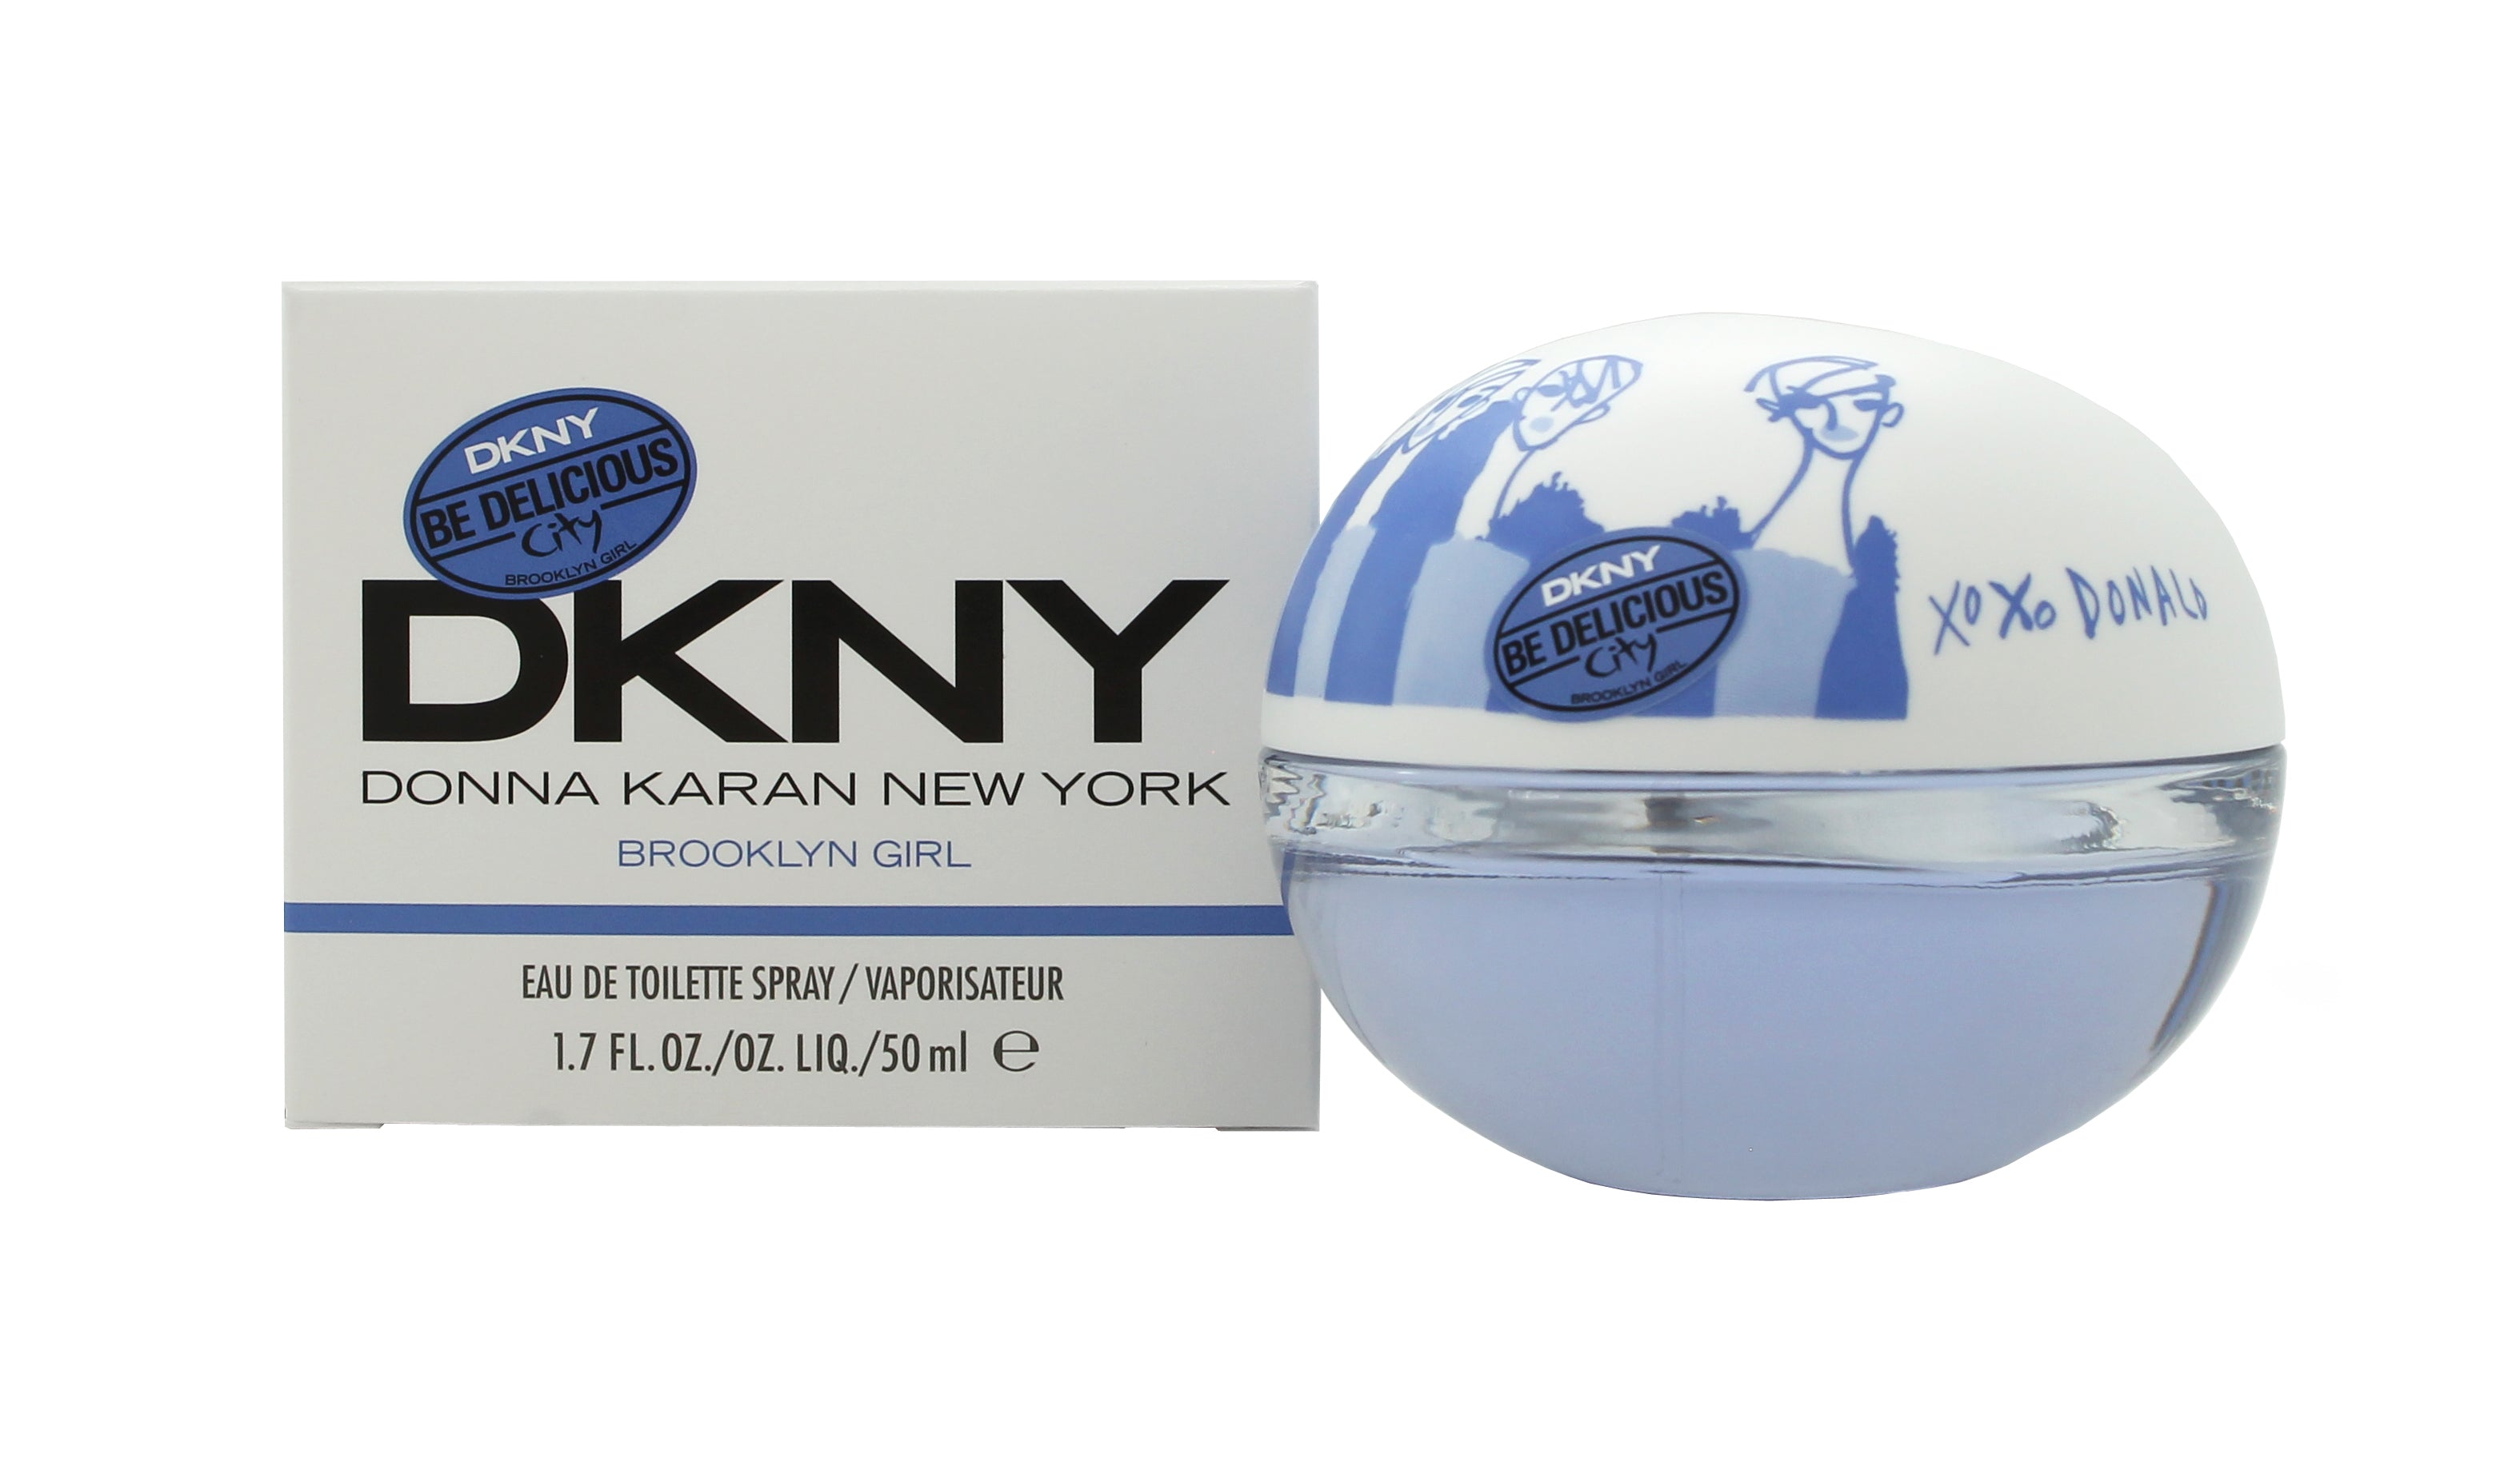 View DKNY Be Delicious City Brooklyn Girl Eau de Toilette 50ml Spray information